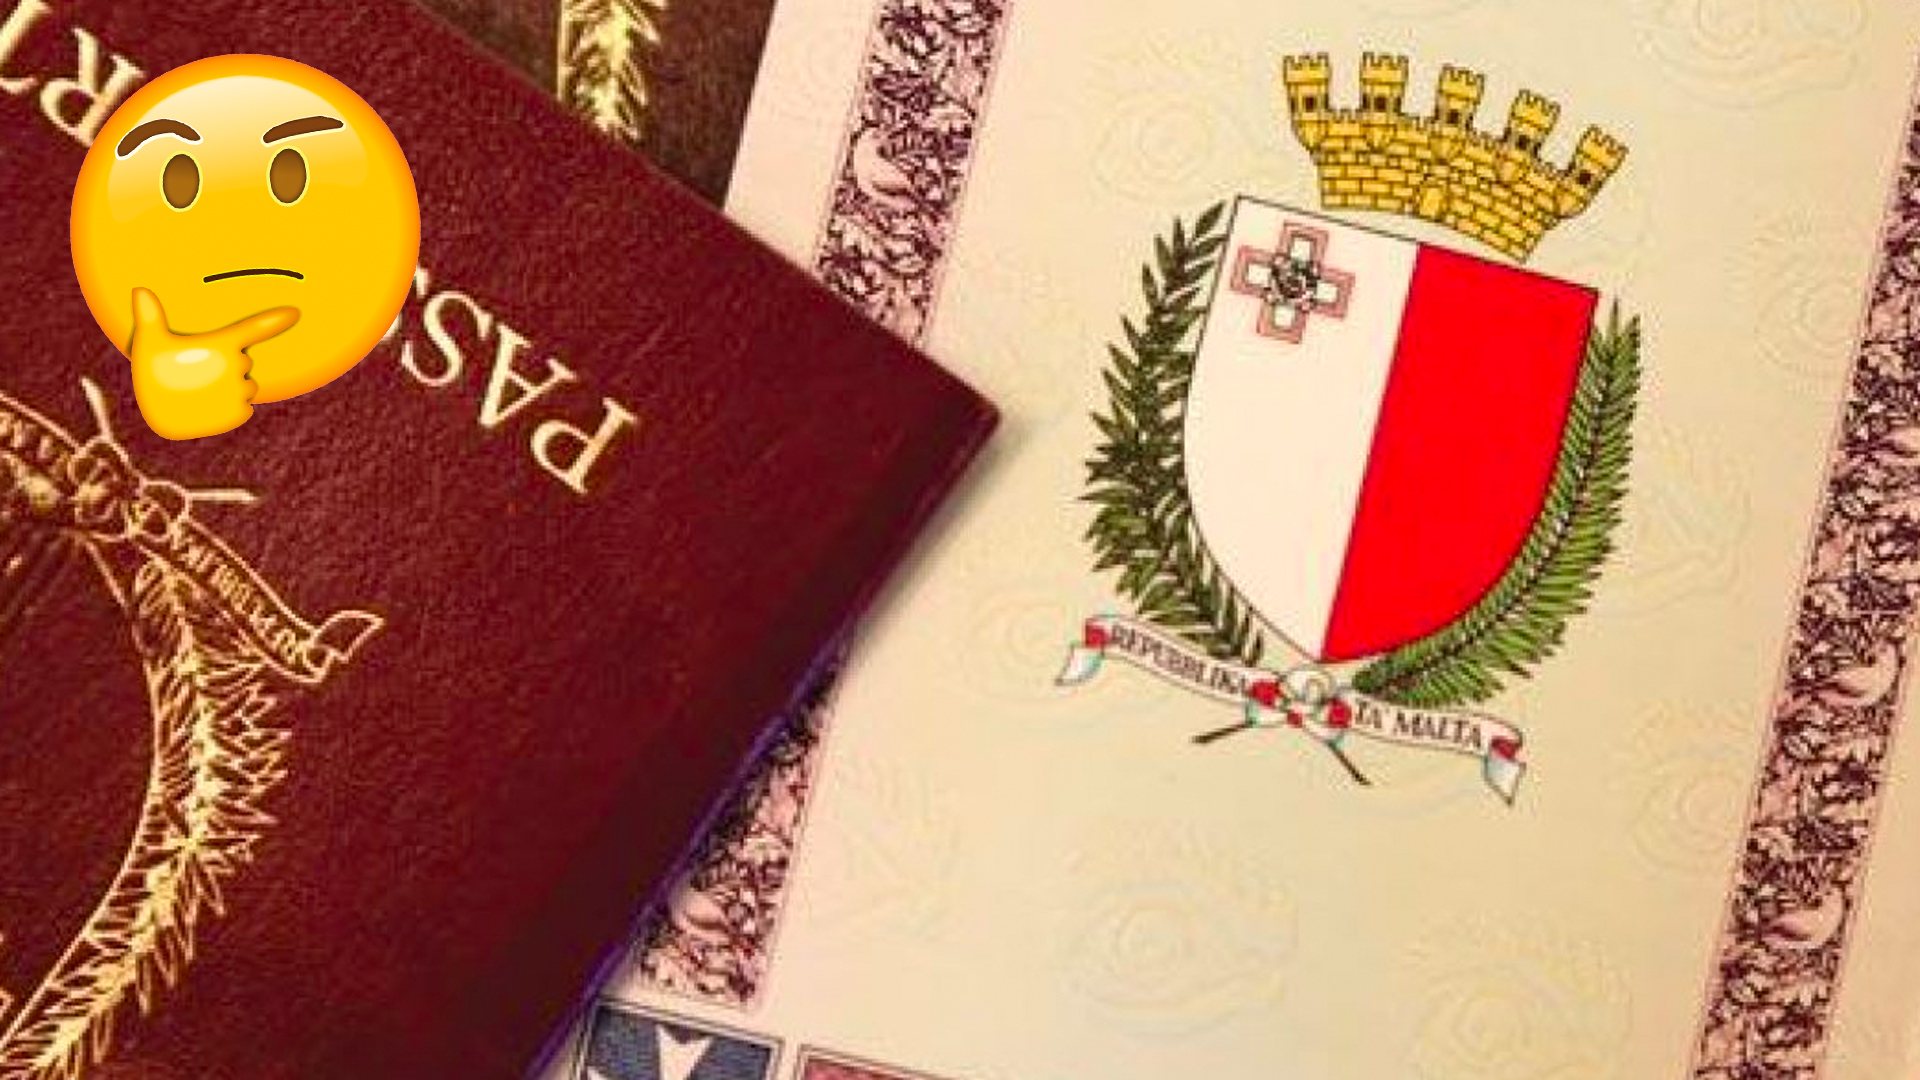 Cash-for-passport scheme reveals residency loophole in Malta